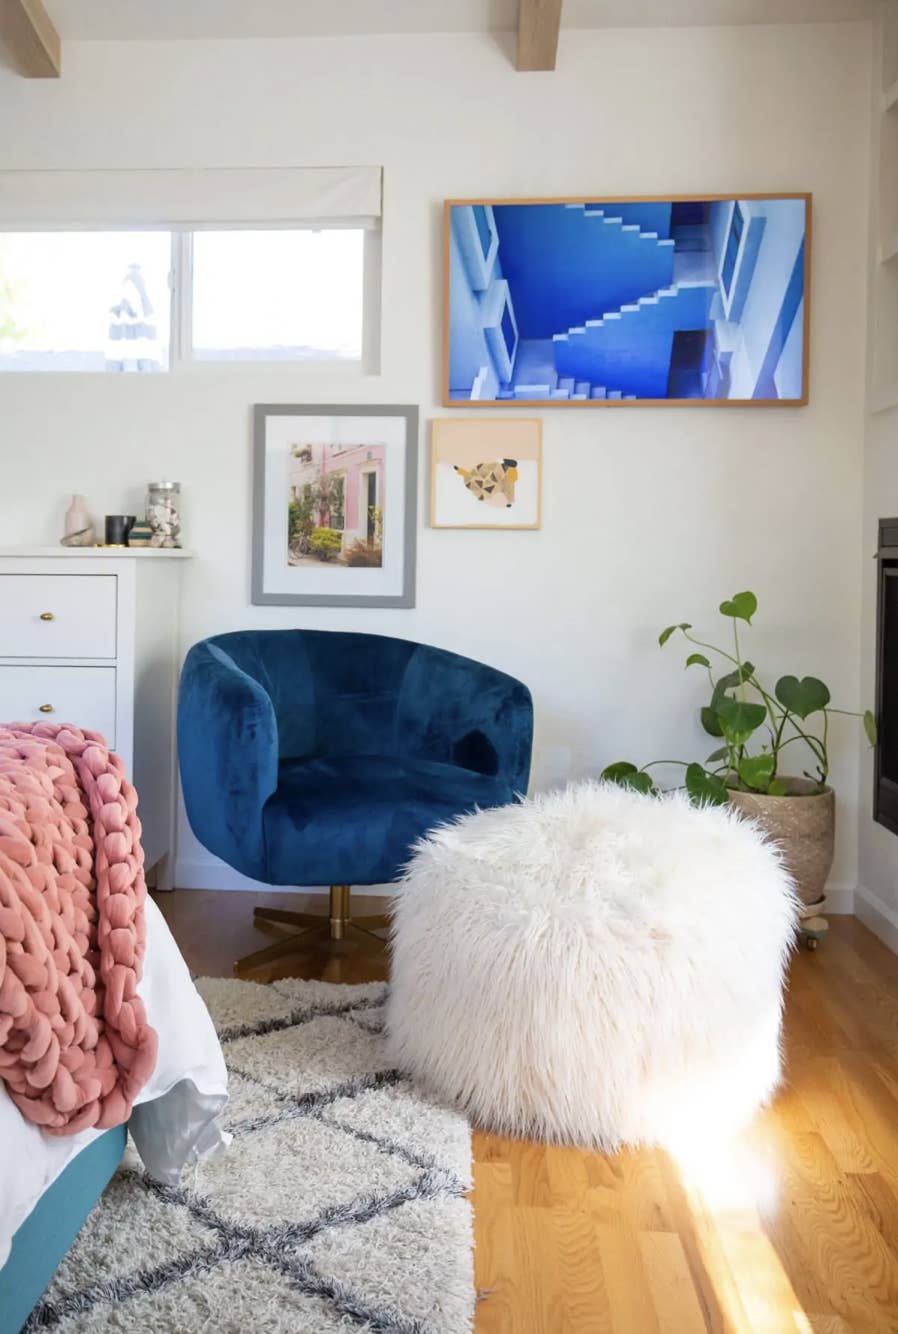 50+ Easy DIY Home Decor Ideas to Transform Your Home - DIY Candy